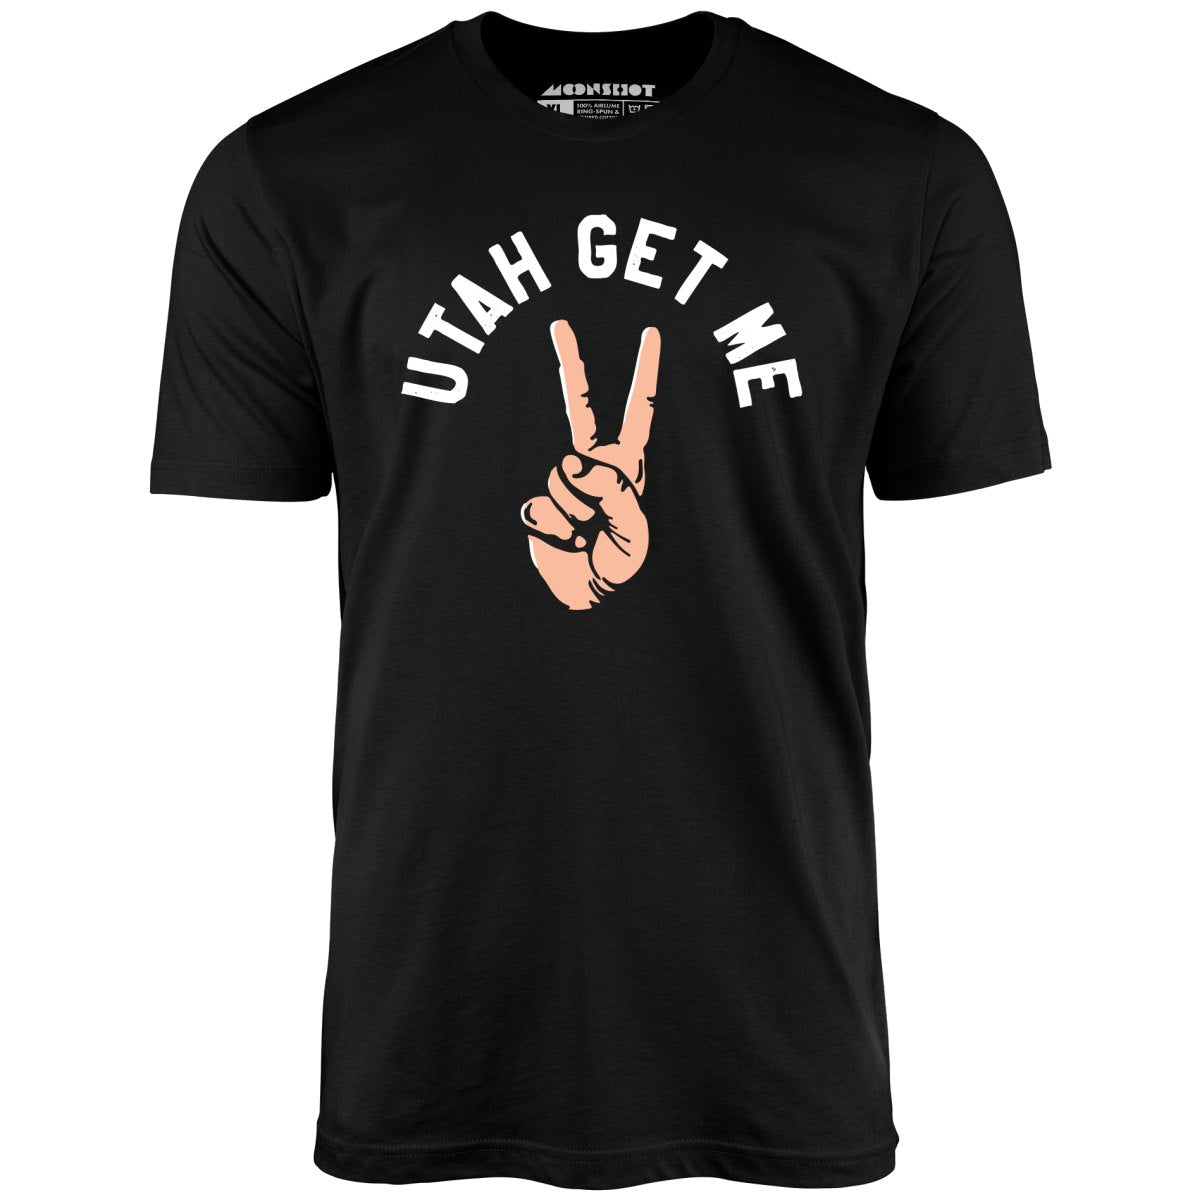 Utah Get Me Two - Unisex T-Shirt